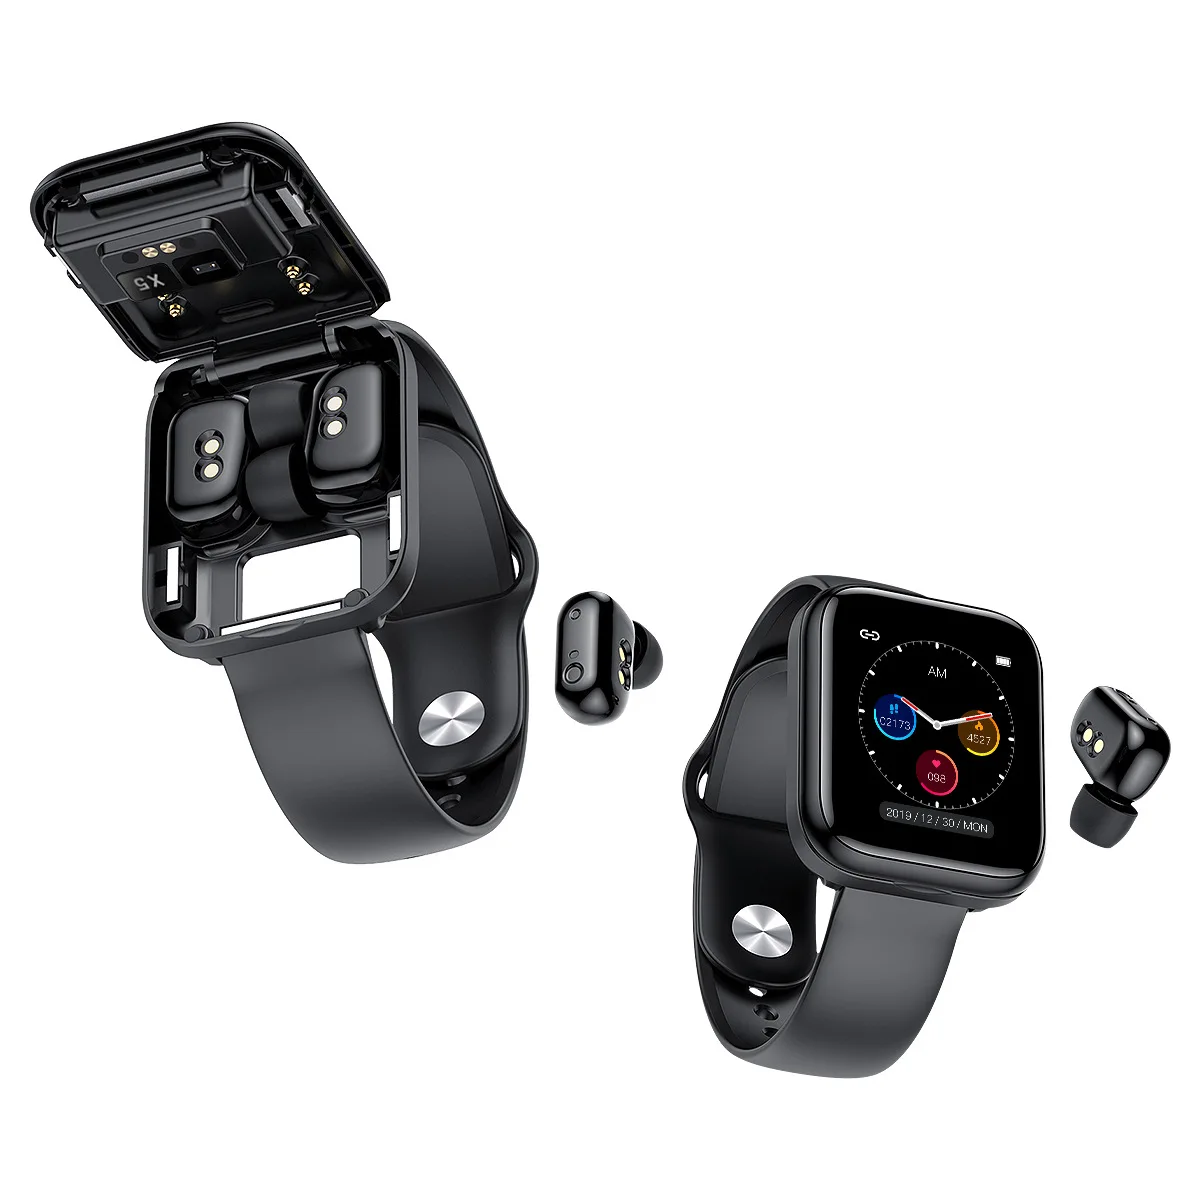 

2022 New Smart Watch Full Screen HD 24 Hour Heart Rate Monitoring IP67 Sports Watch Call Bracelet Smart Watch with earphones, Black/god